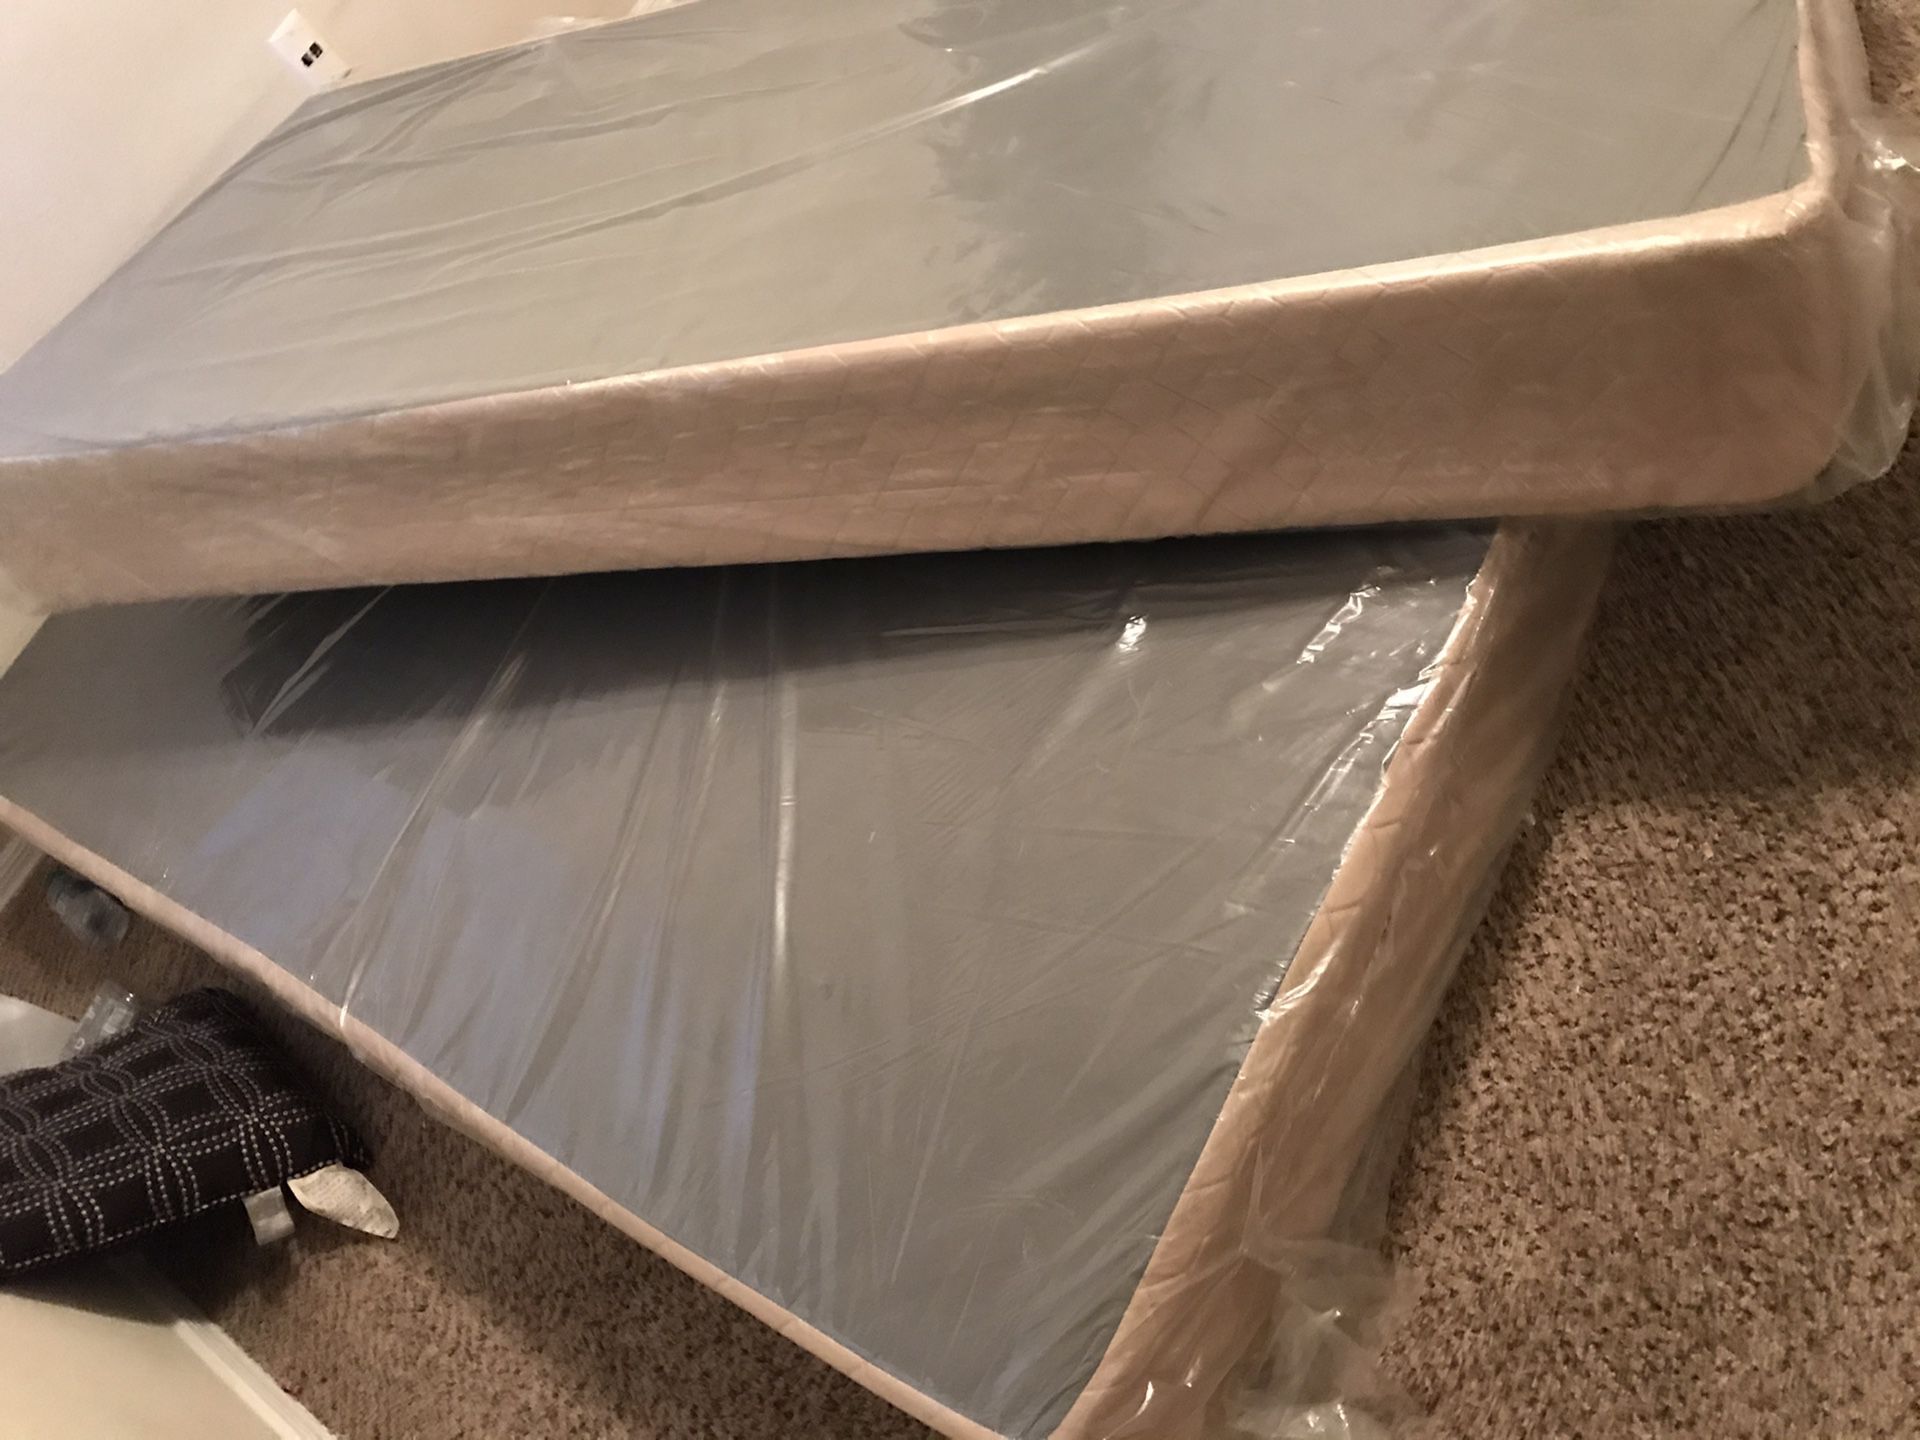 King size bed frames brand new !! I bought a platform frame for my mattress